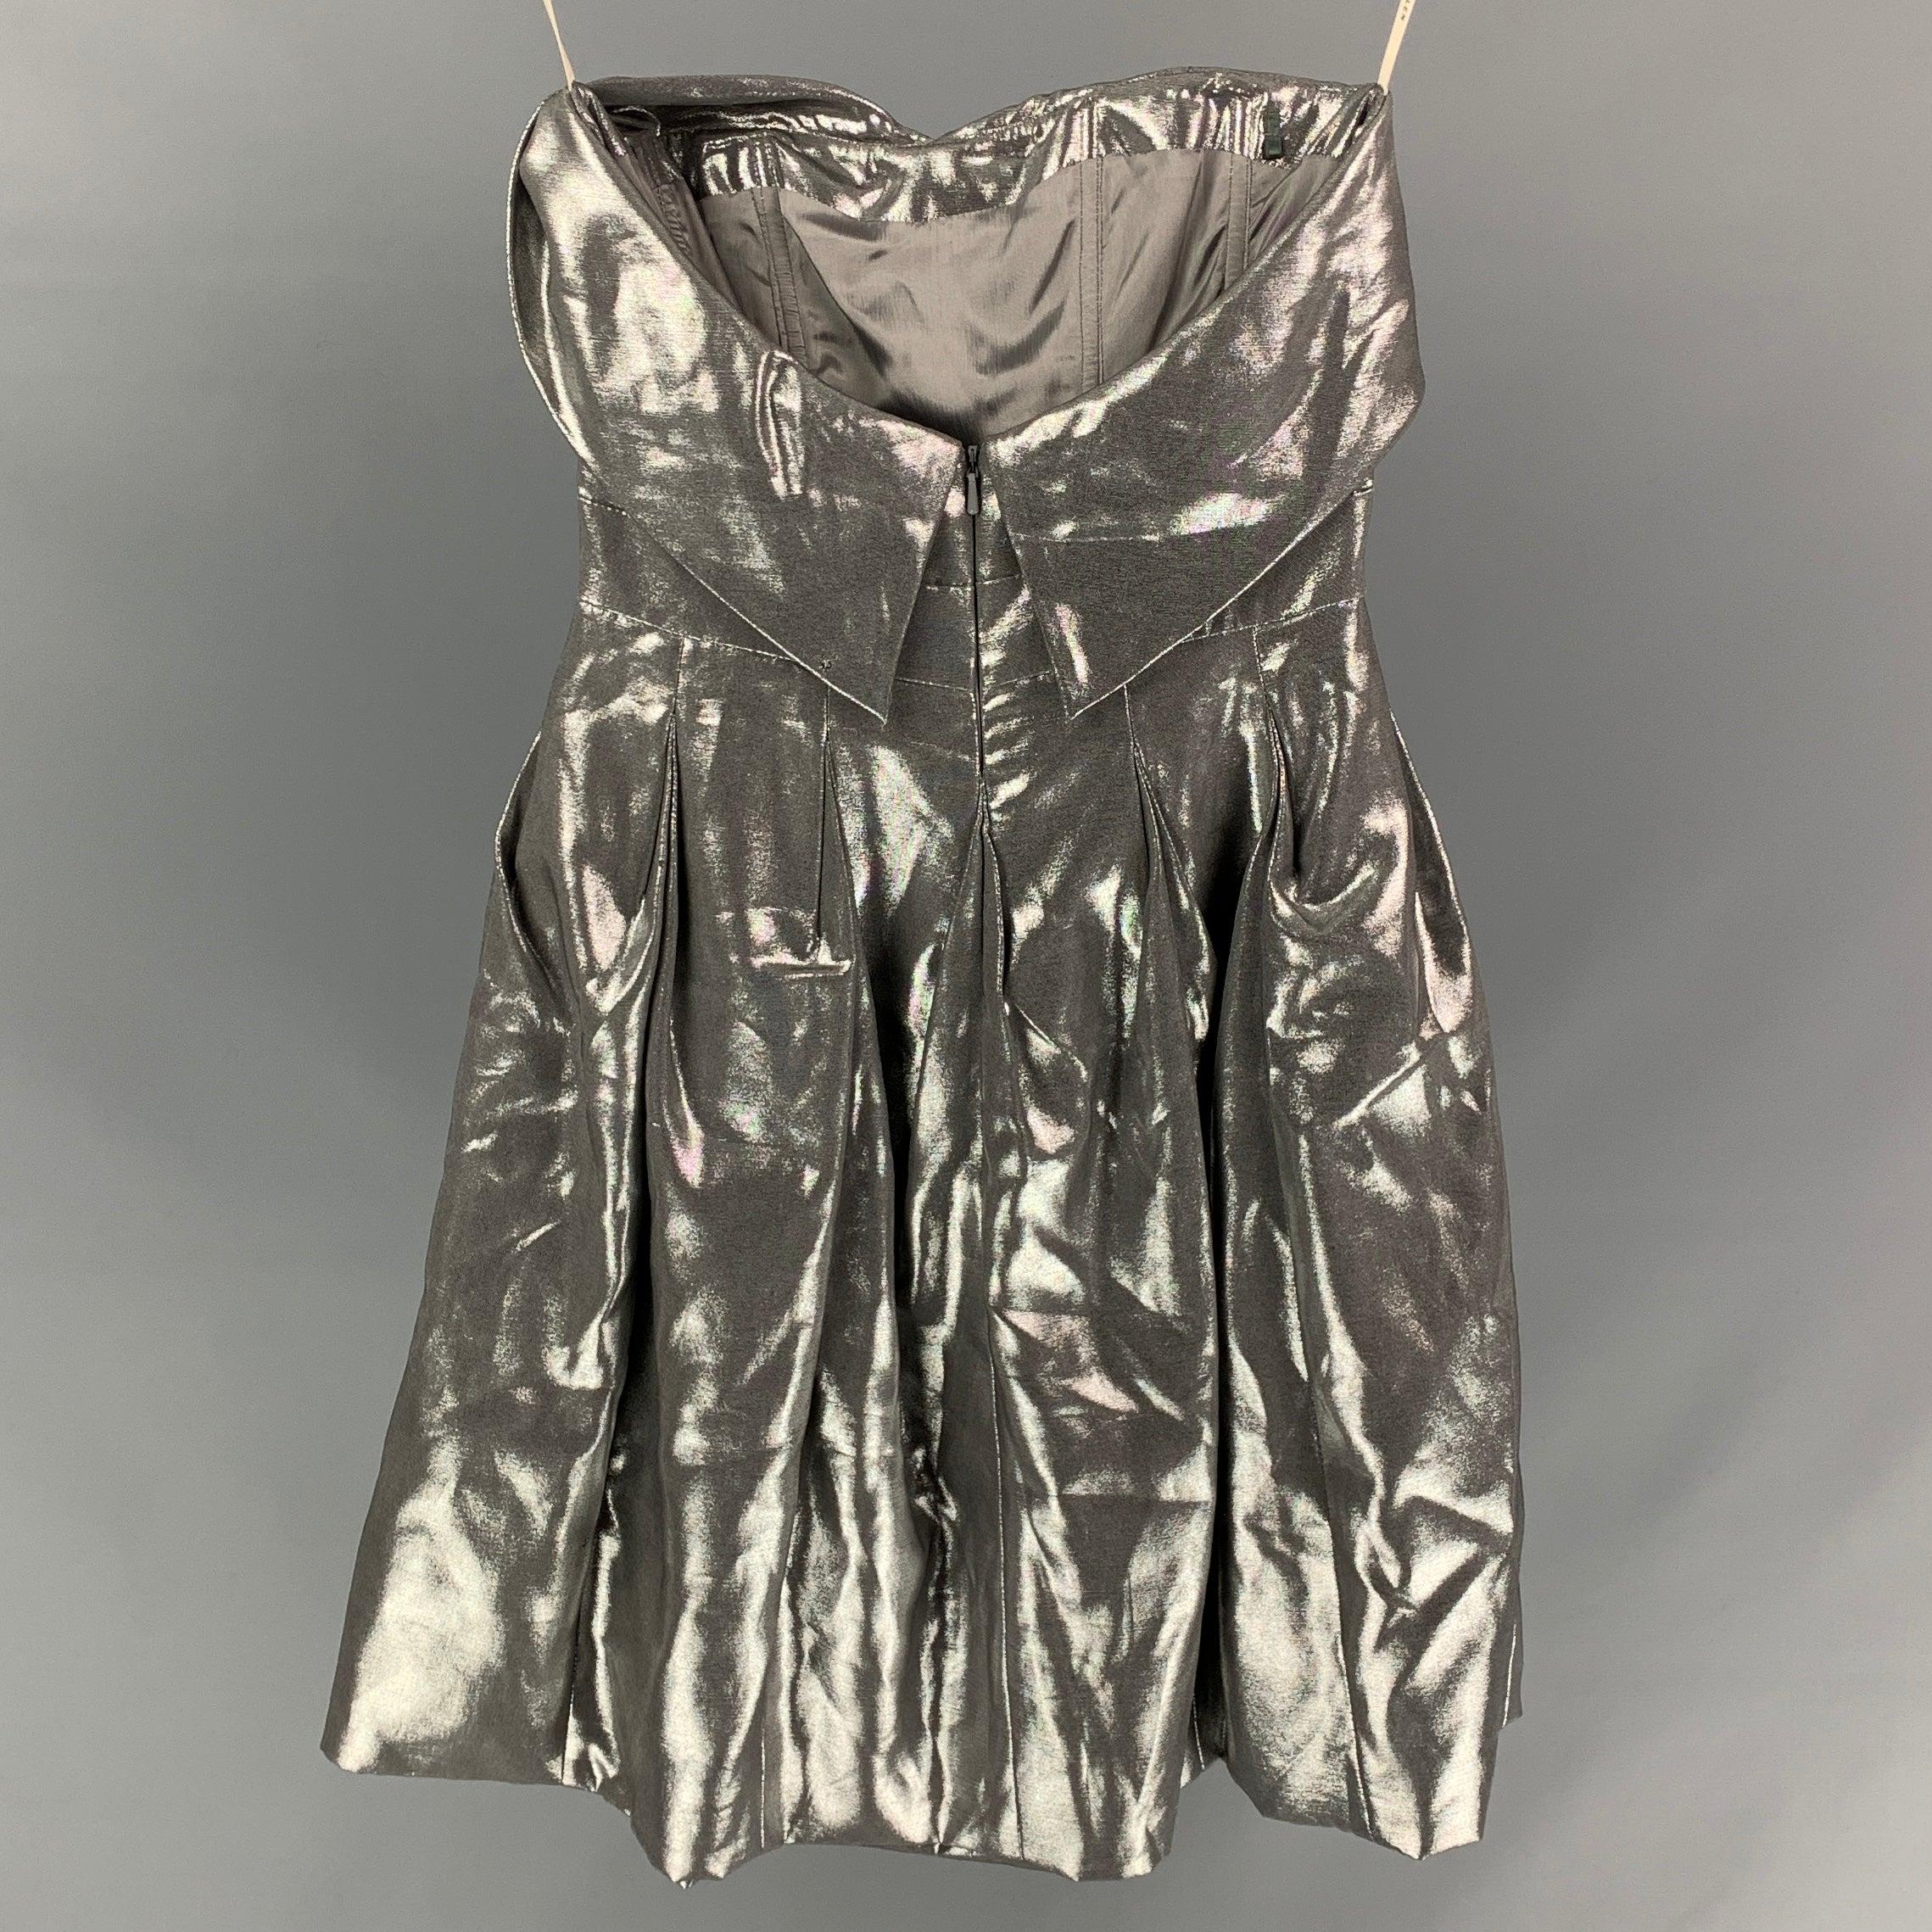 KAREN MILLEN Size 4 Silver Viscose Blend Metallic Strapless Dress In Good Condition For Sale In San Francisco, CA